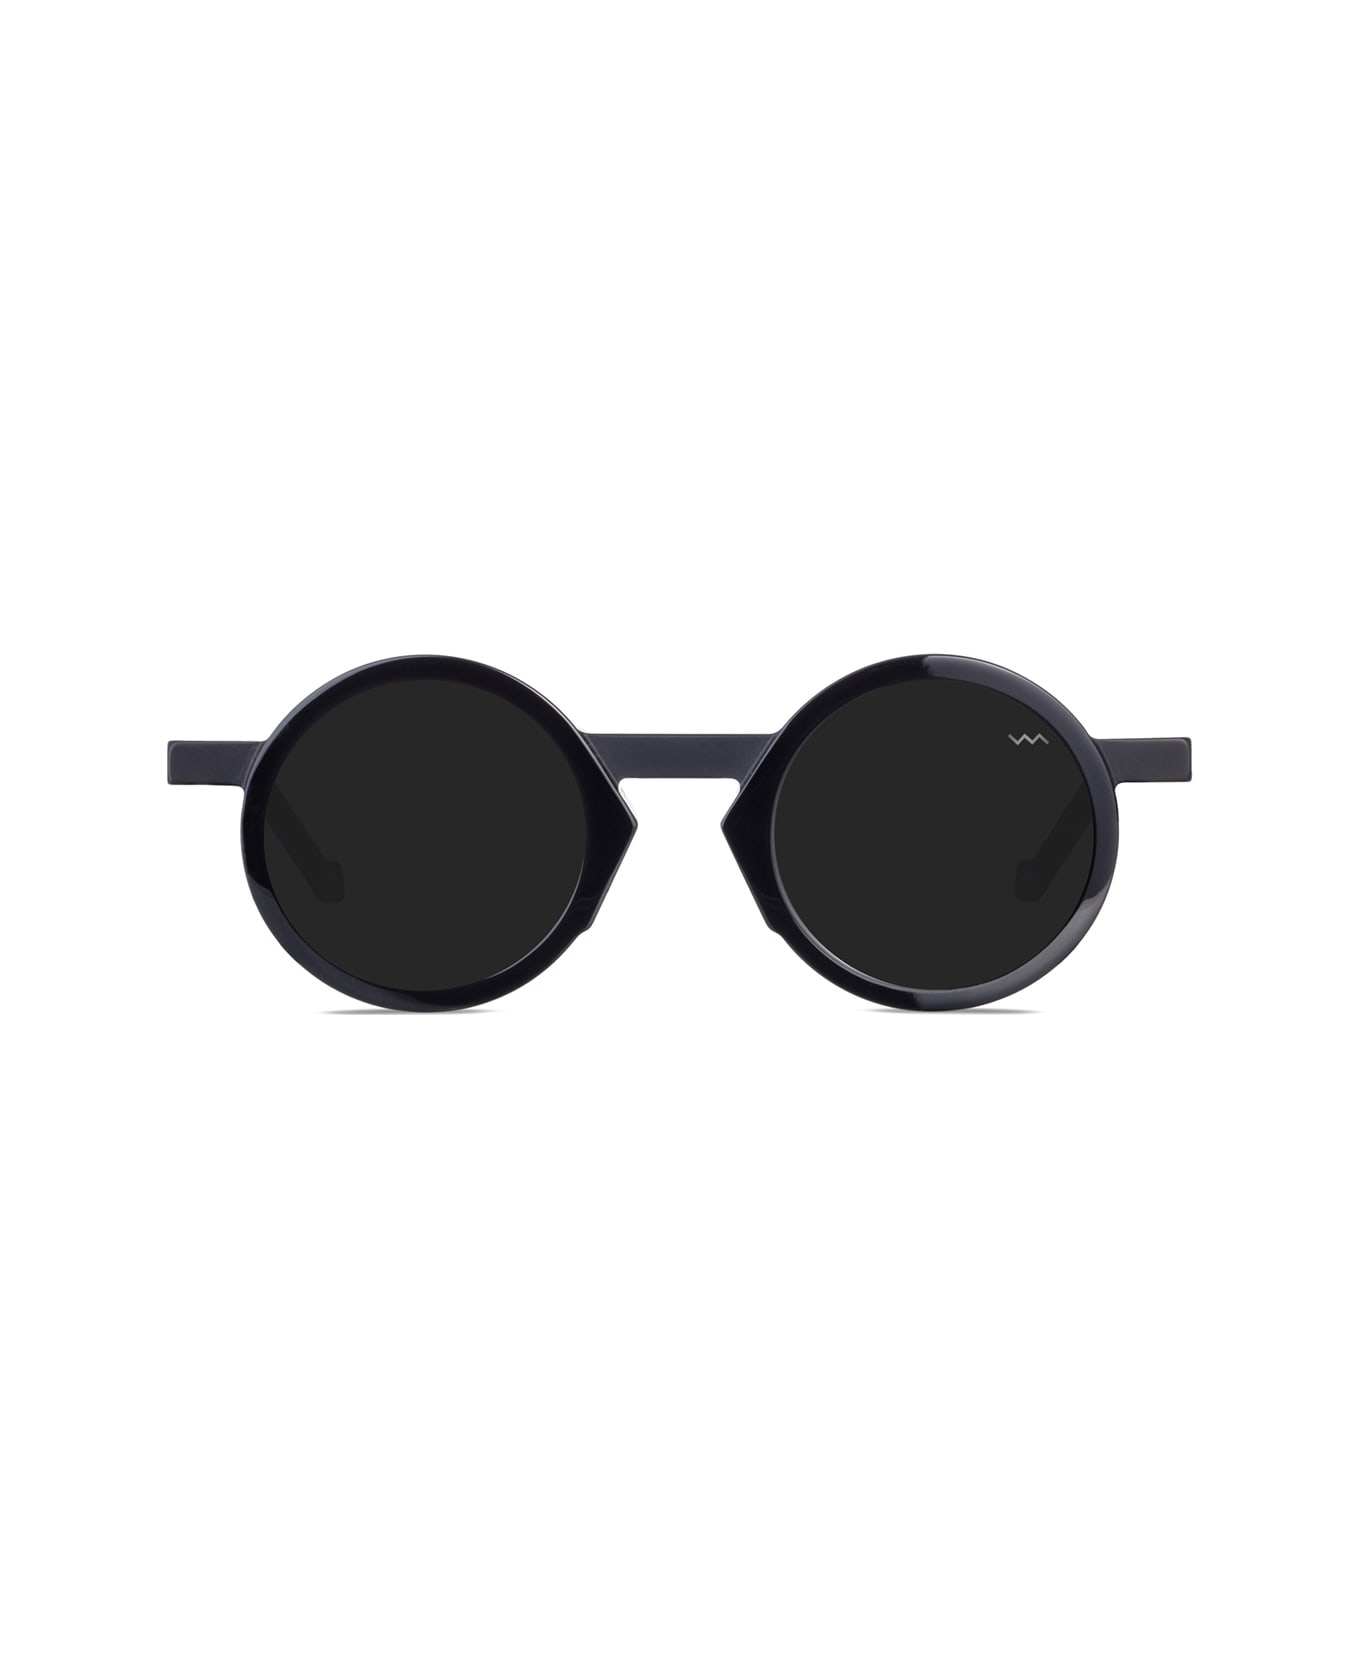 VAVA Wl0040 Black Sunglasses - Nero サングラス